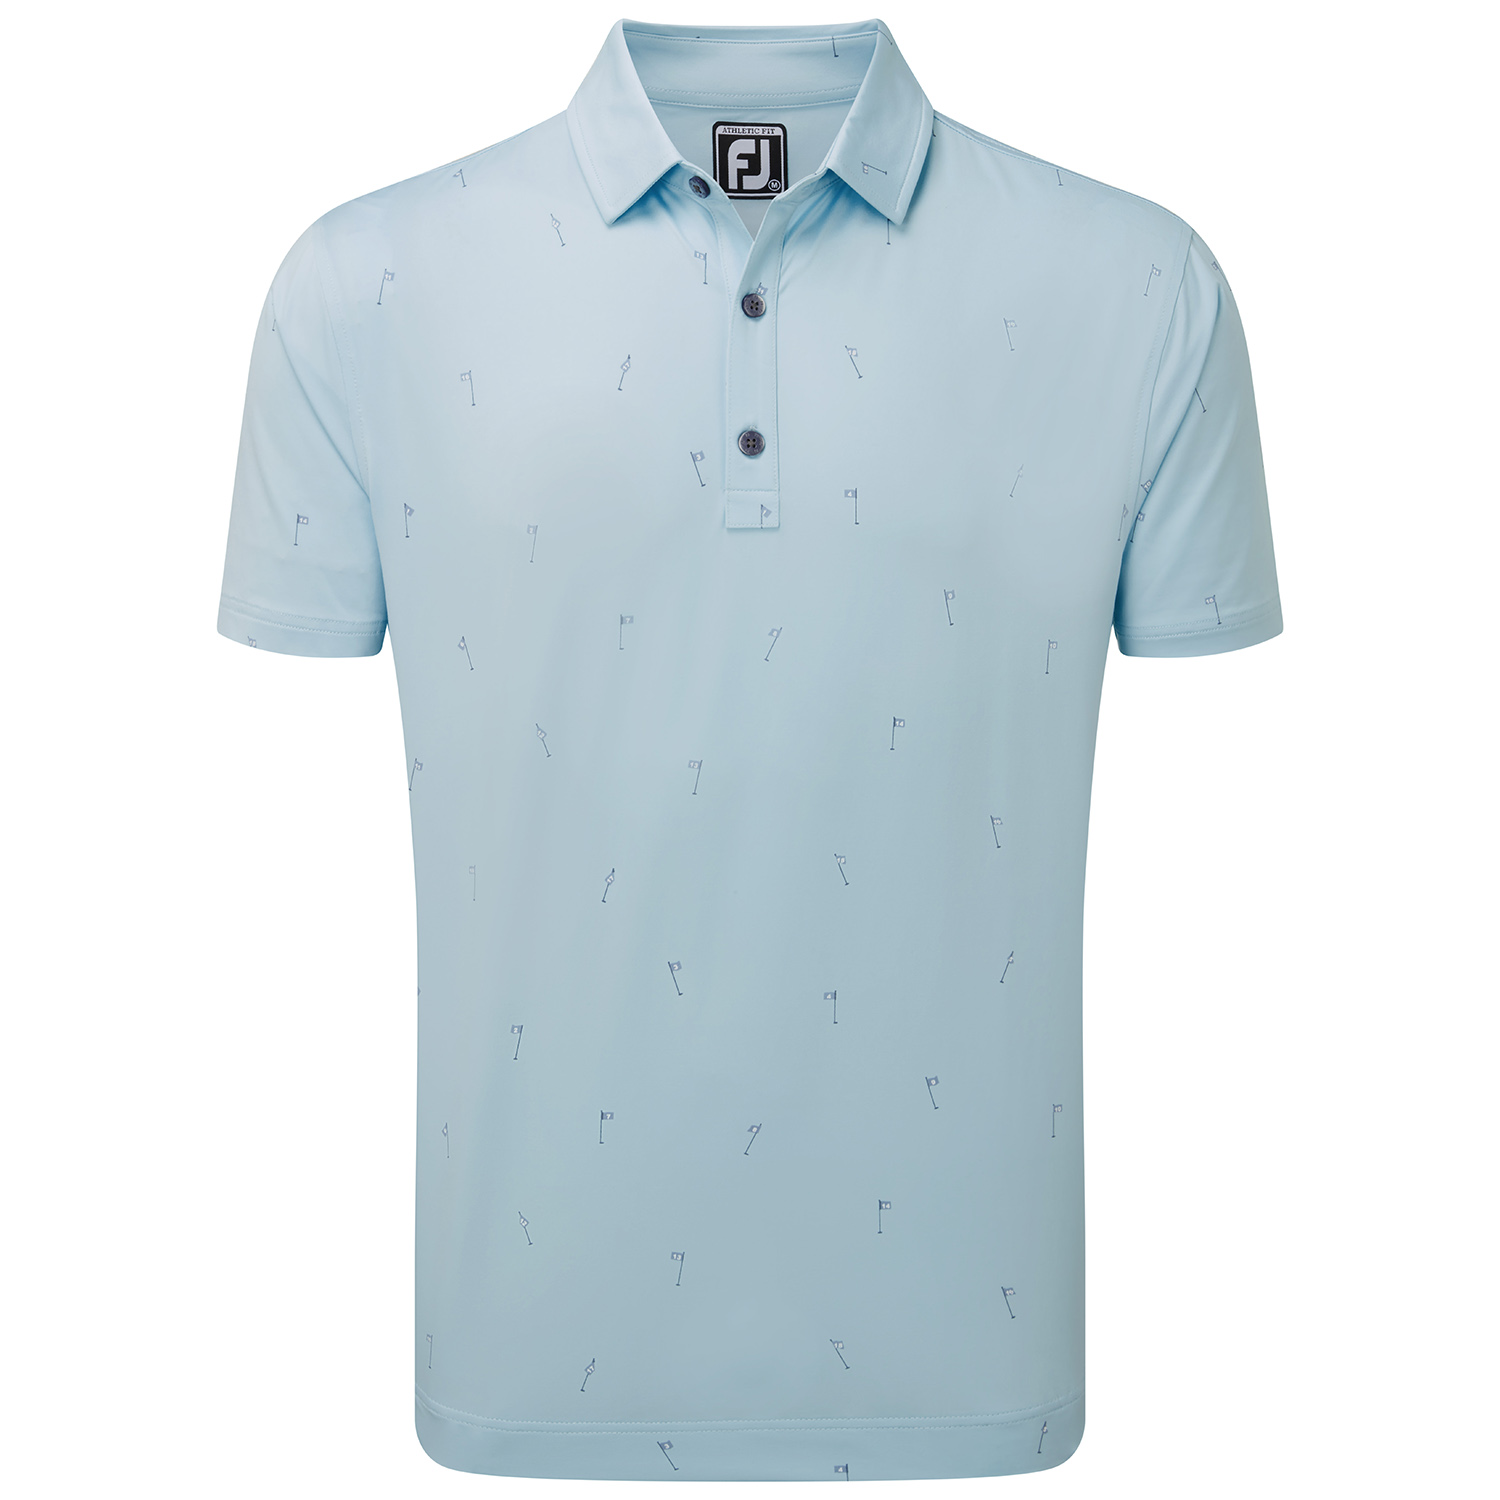 FootJoy 18 Holes Print Golf Polo Shirt